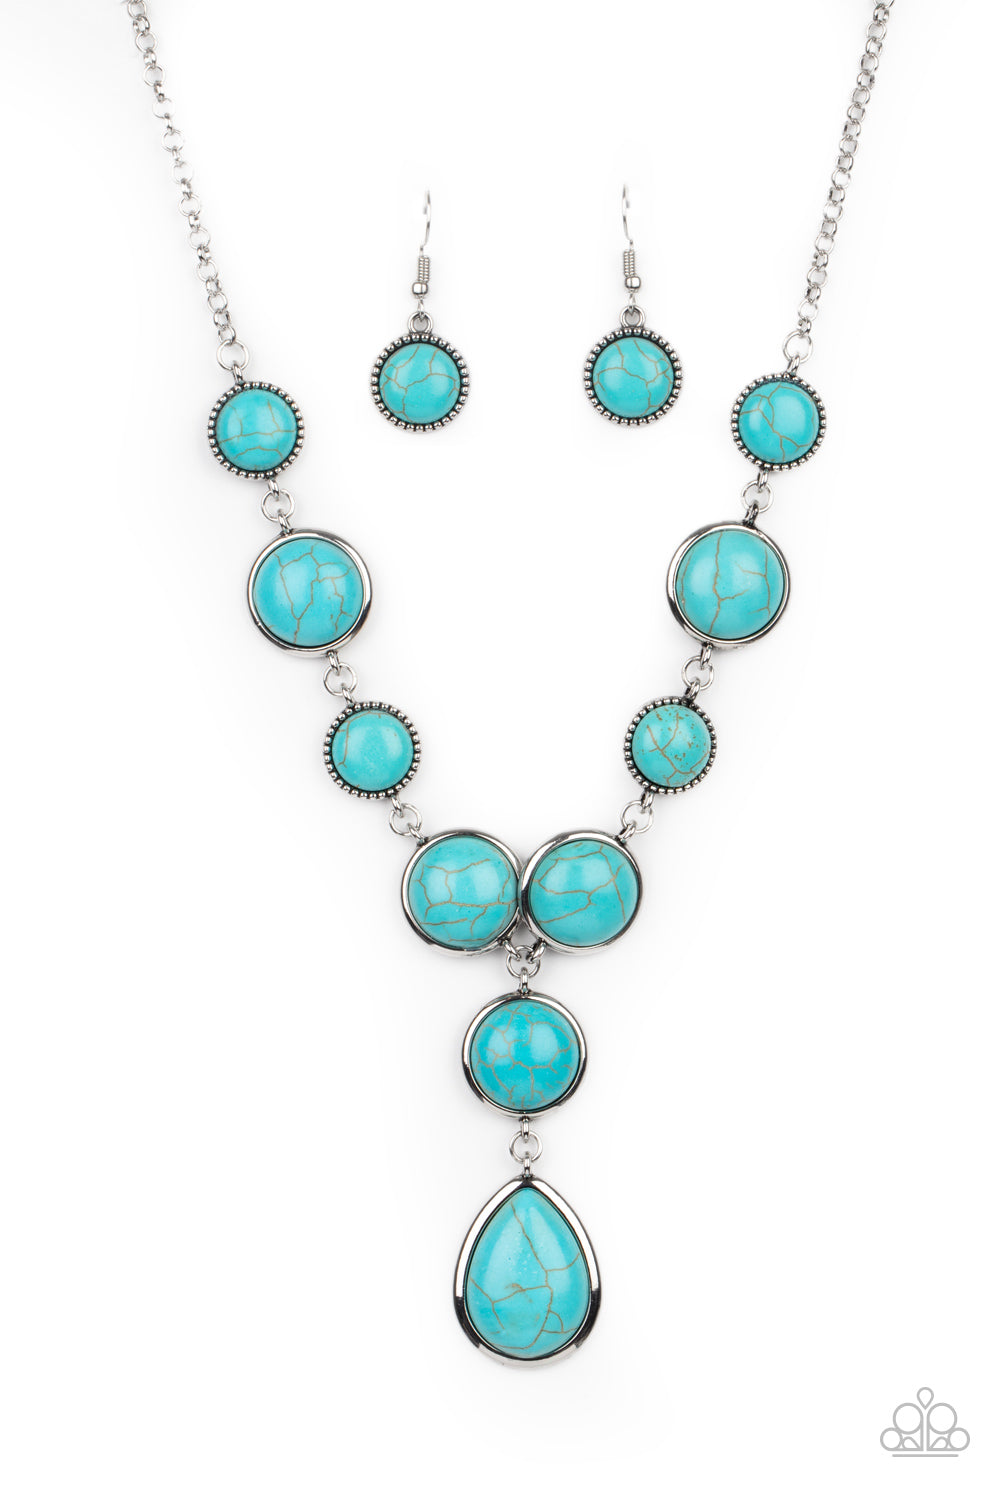 Terrestrial Trailblazer - Blue necklace plus matching Turn Up The Terra - blue bracelet 795